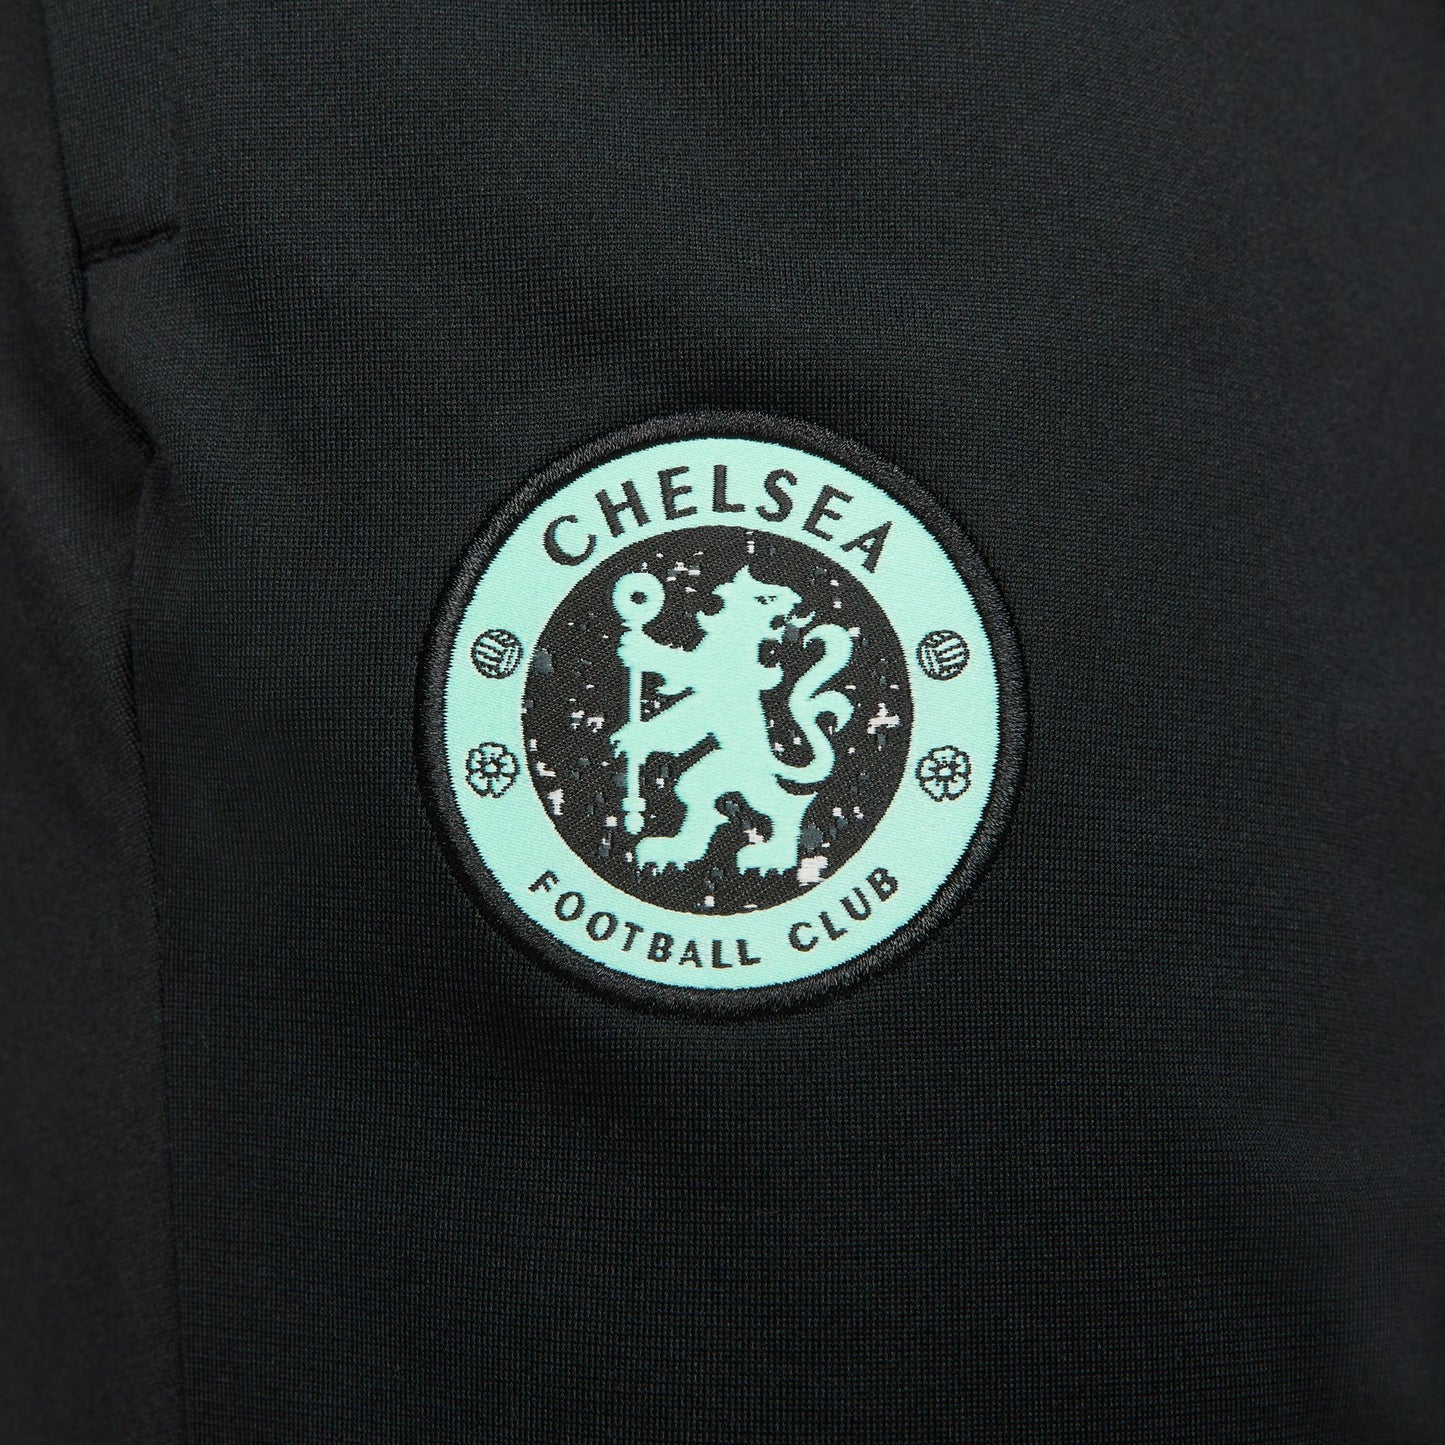 Chelsea FC Strike Third Men's Nike Dri-FIT Soccer Track Pants